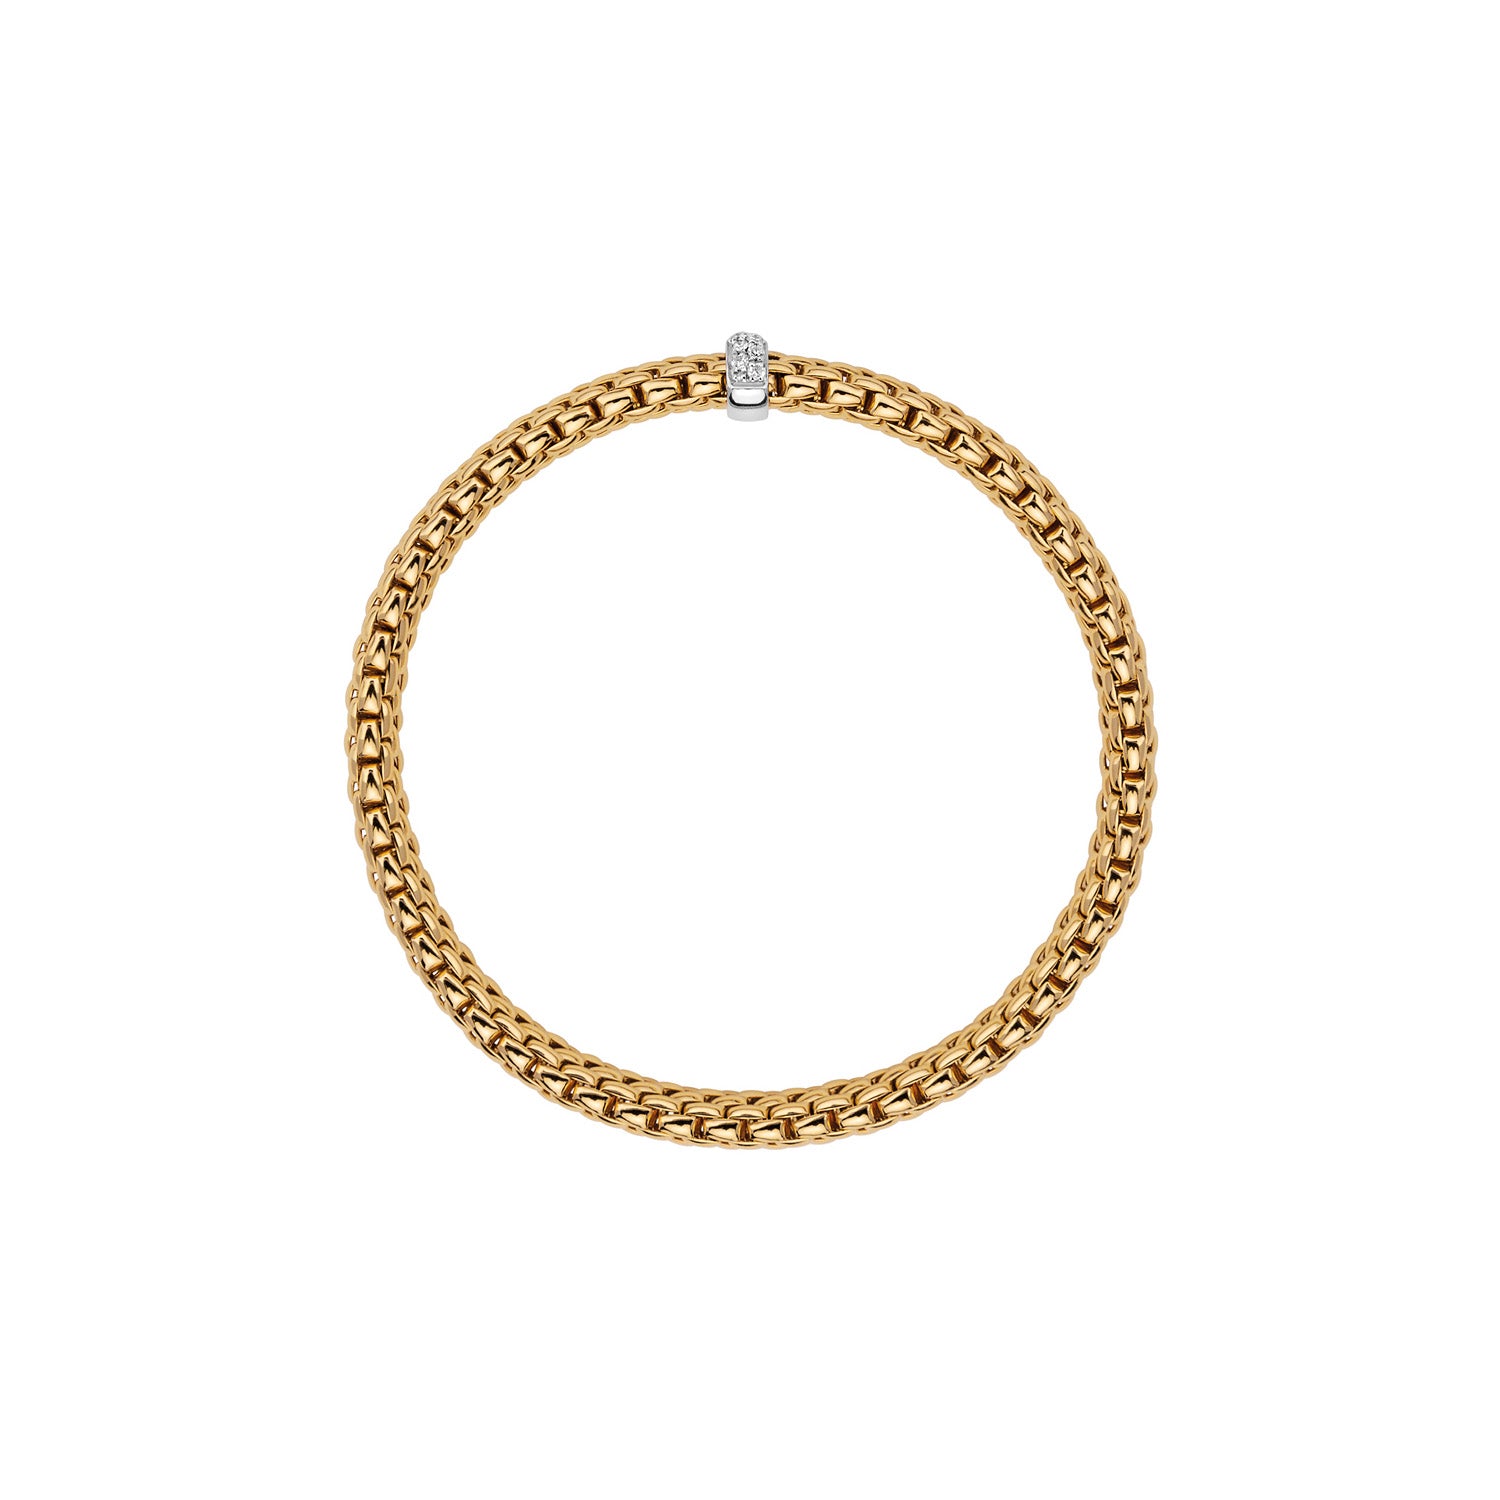 Flex'it Vendome bracelet with diamonds in Yellow Gold